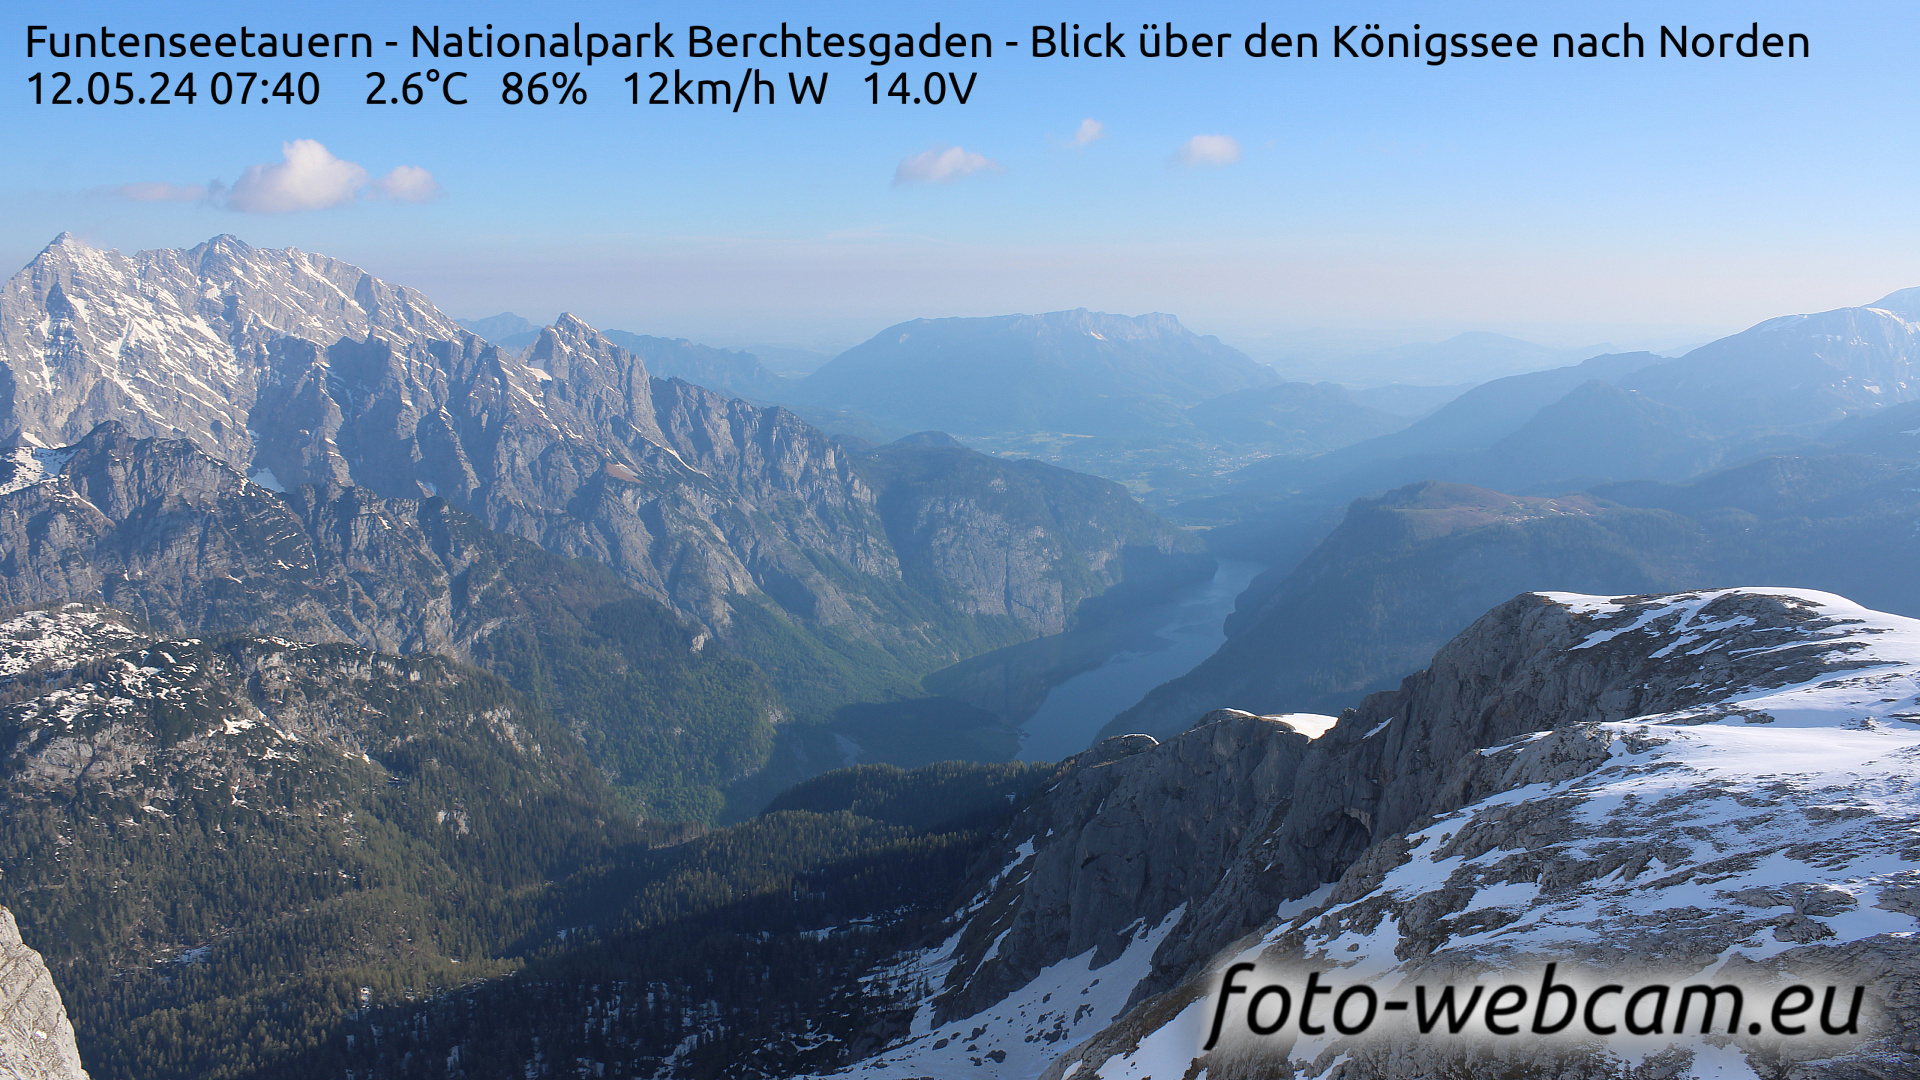 Berchtesgaden Me. 07:48